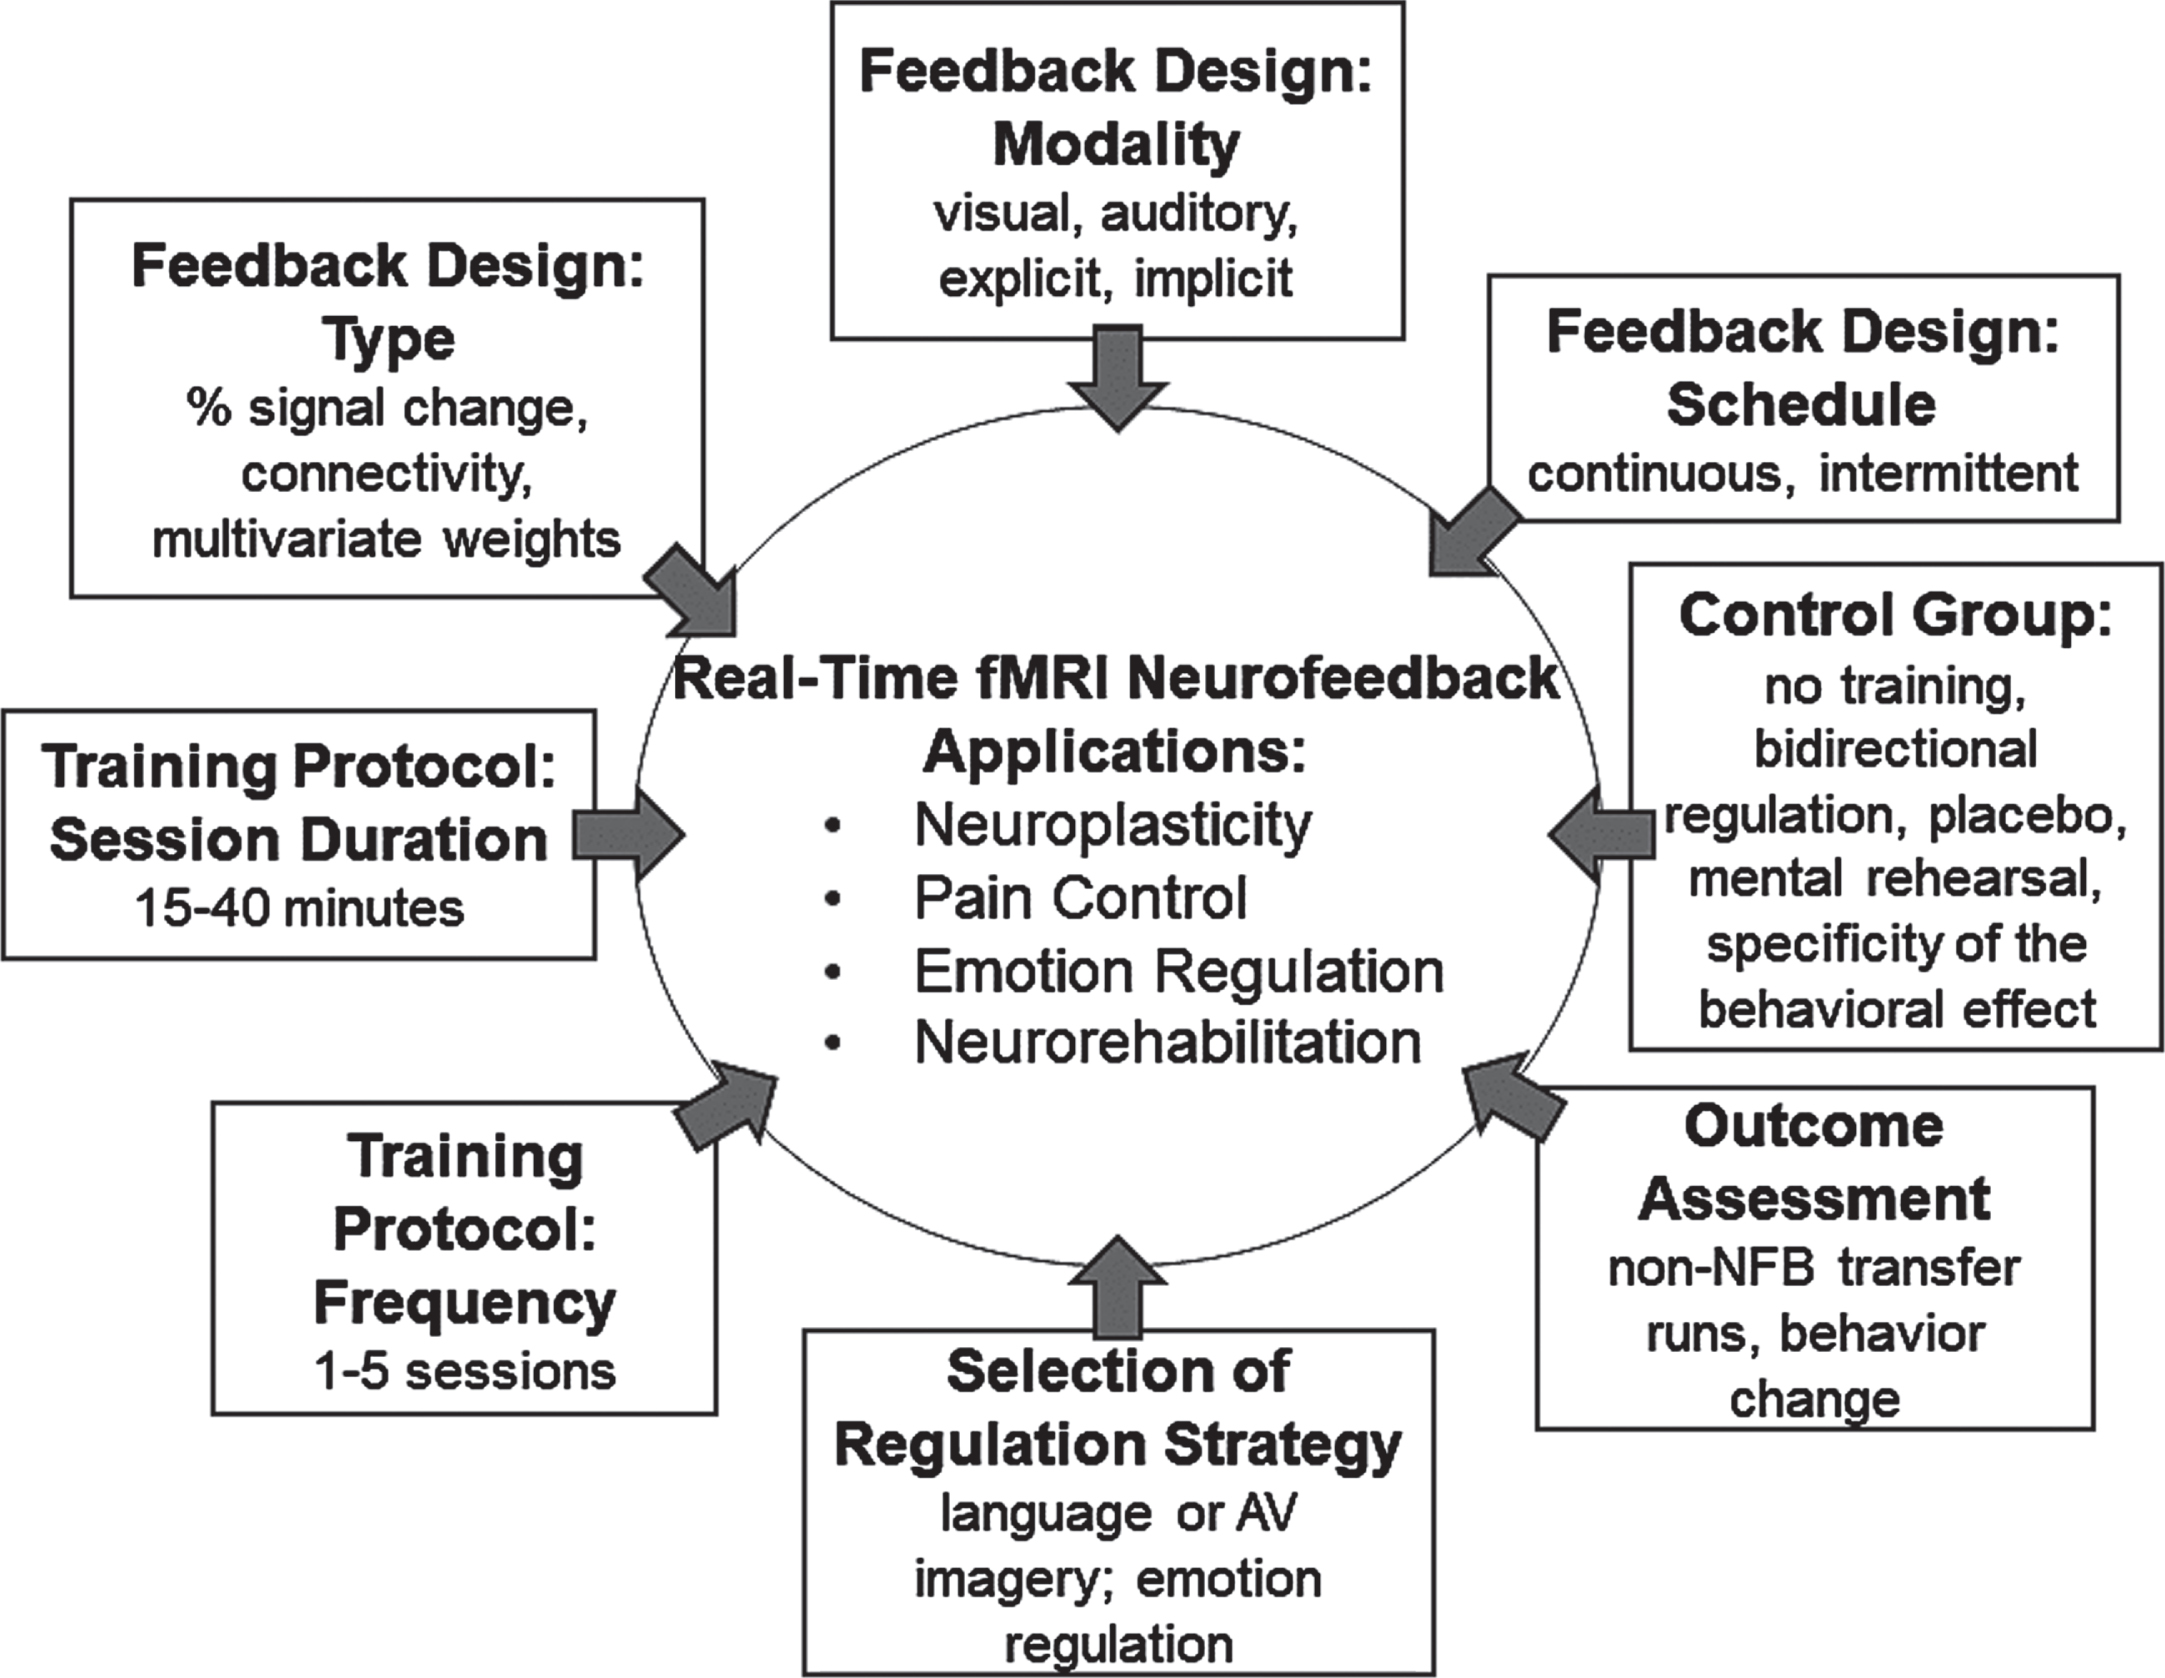 Parameter and design characteristics in fMRI NFB studies.